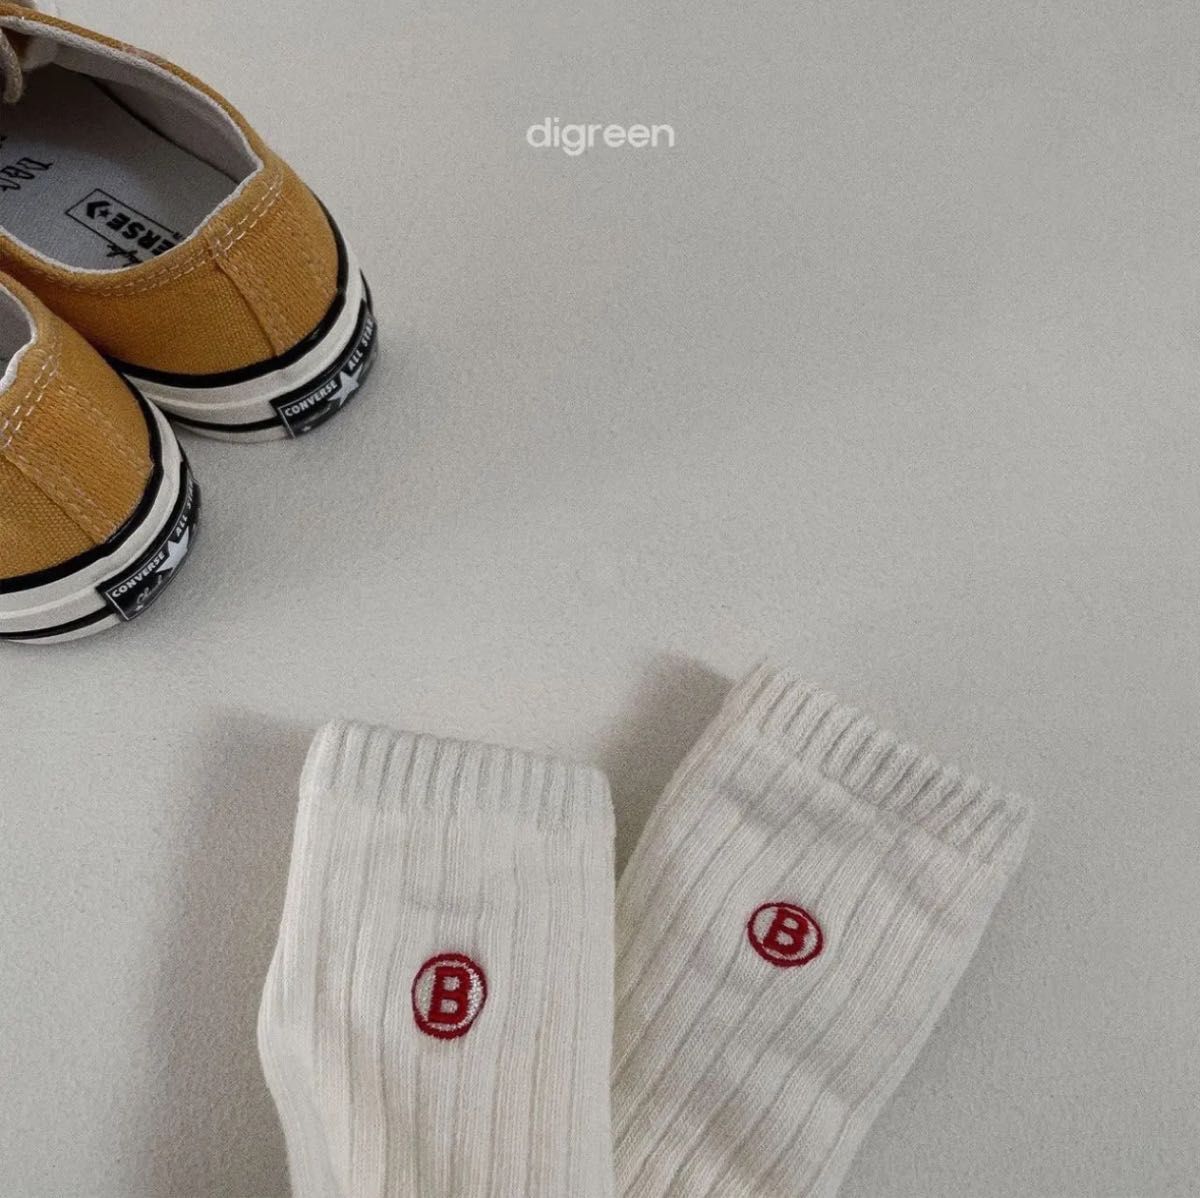 〔M 12.5-14.5cm〕digreen / butter socks